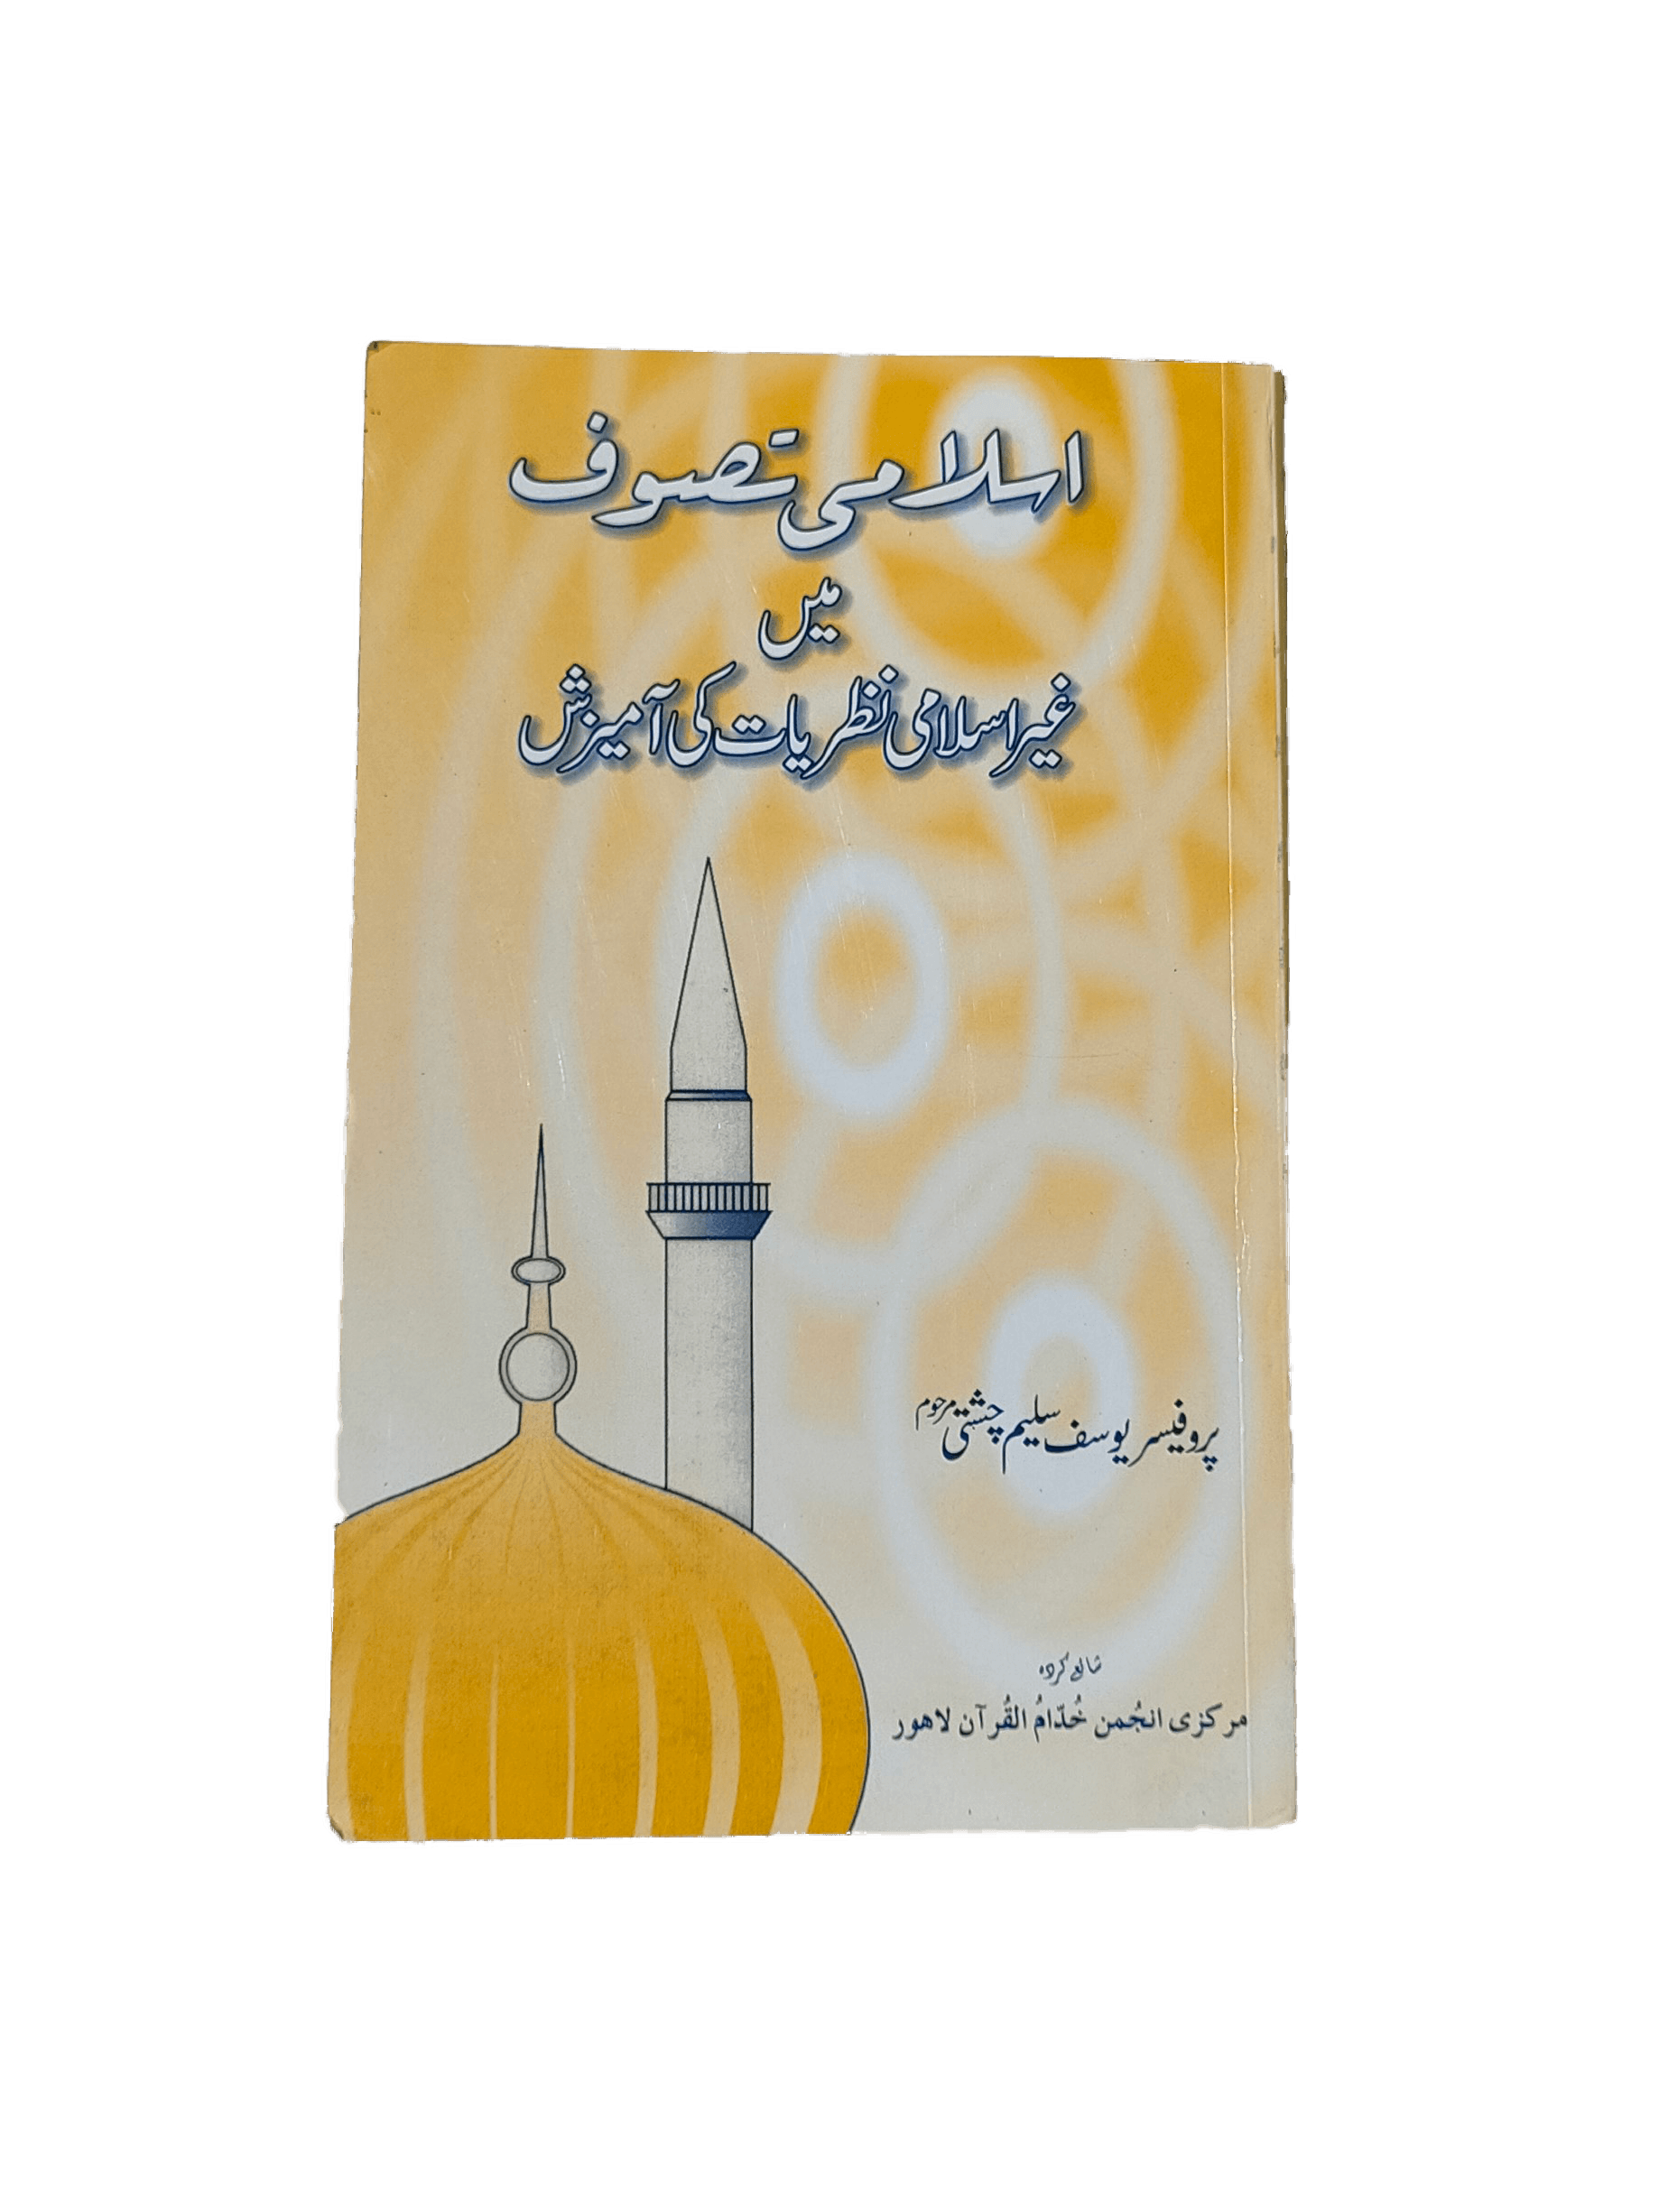 Islami Tasawuf Mein Ghair Islami Nazaryat (Non-Islamic Ideas in Islamic Mysticism) - KHAJISTAN™